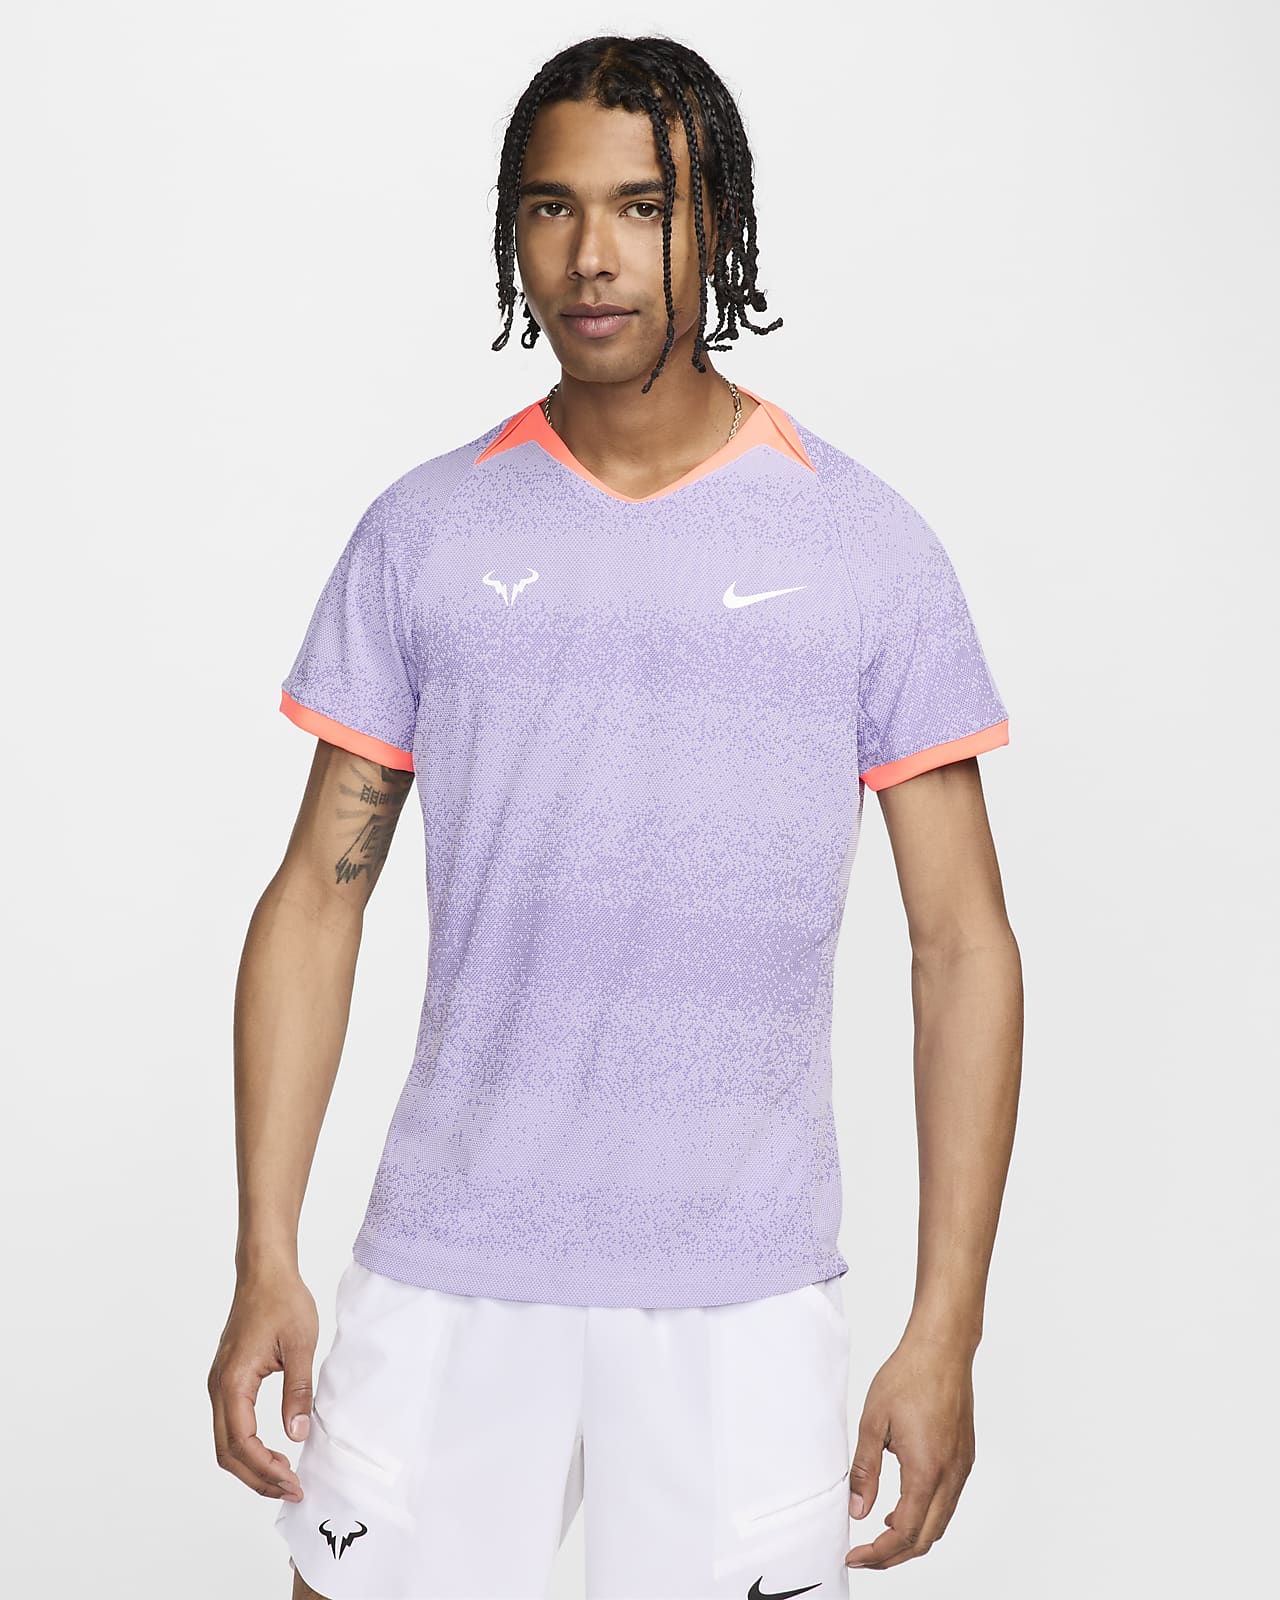 Rafa Men's Dri-FIT ADV Short-Sleeve Tennis Top. Nike.com